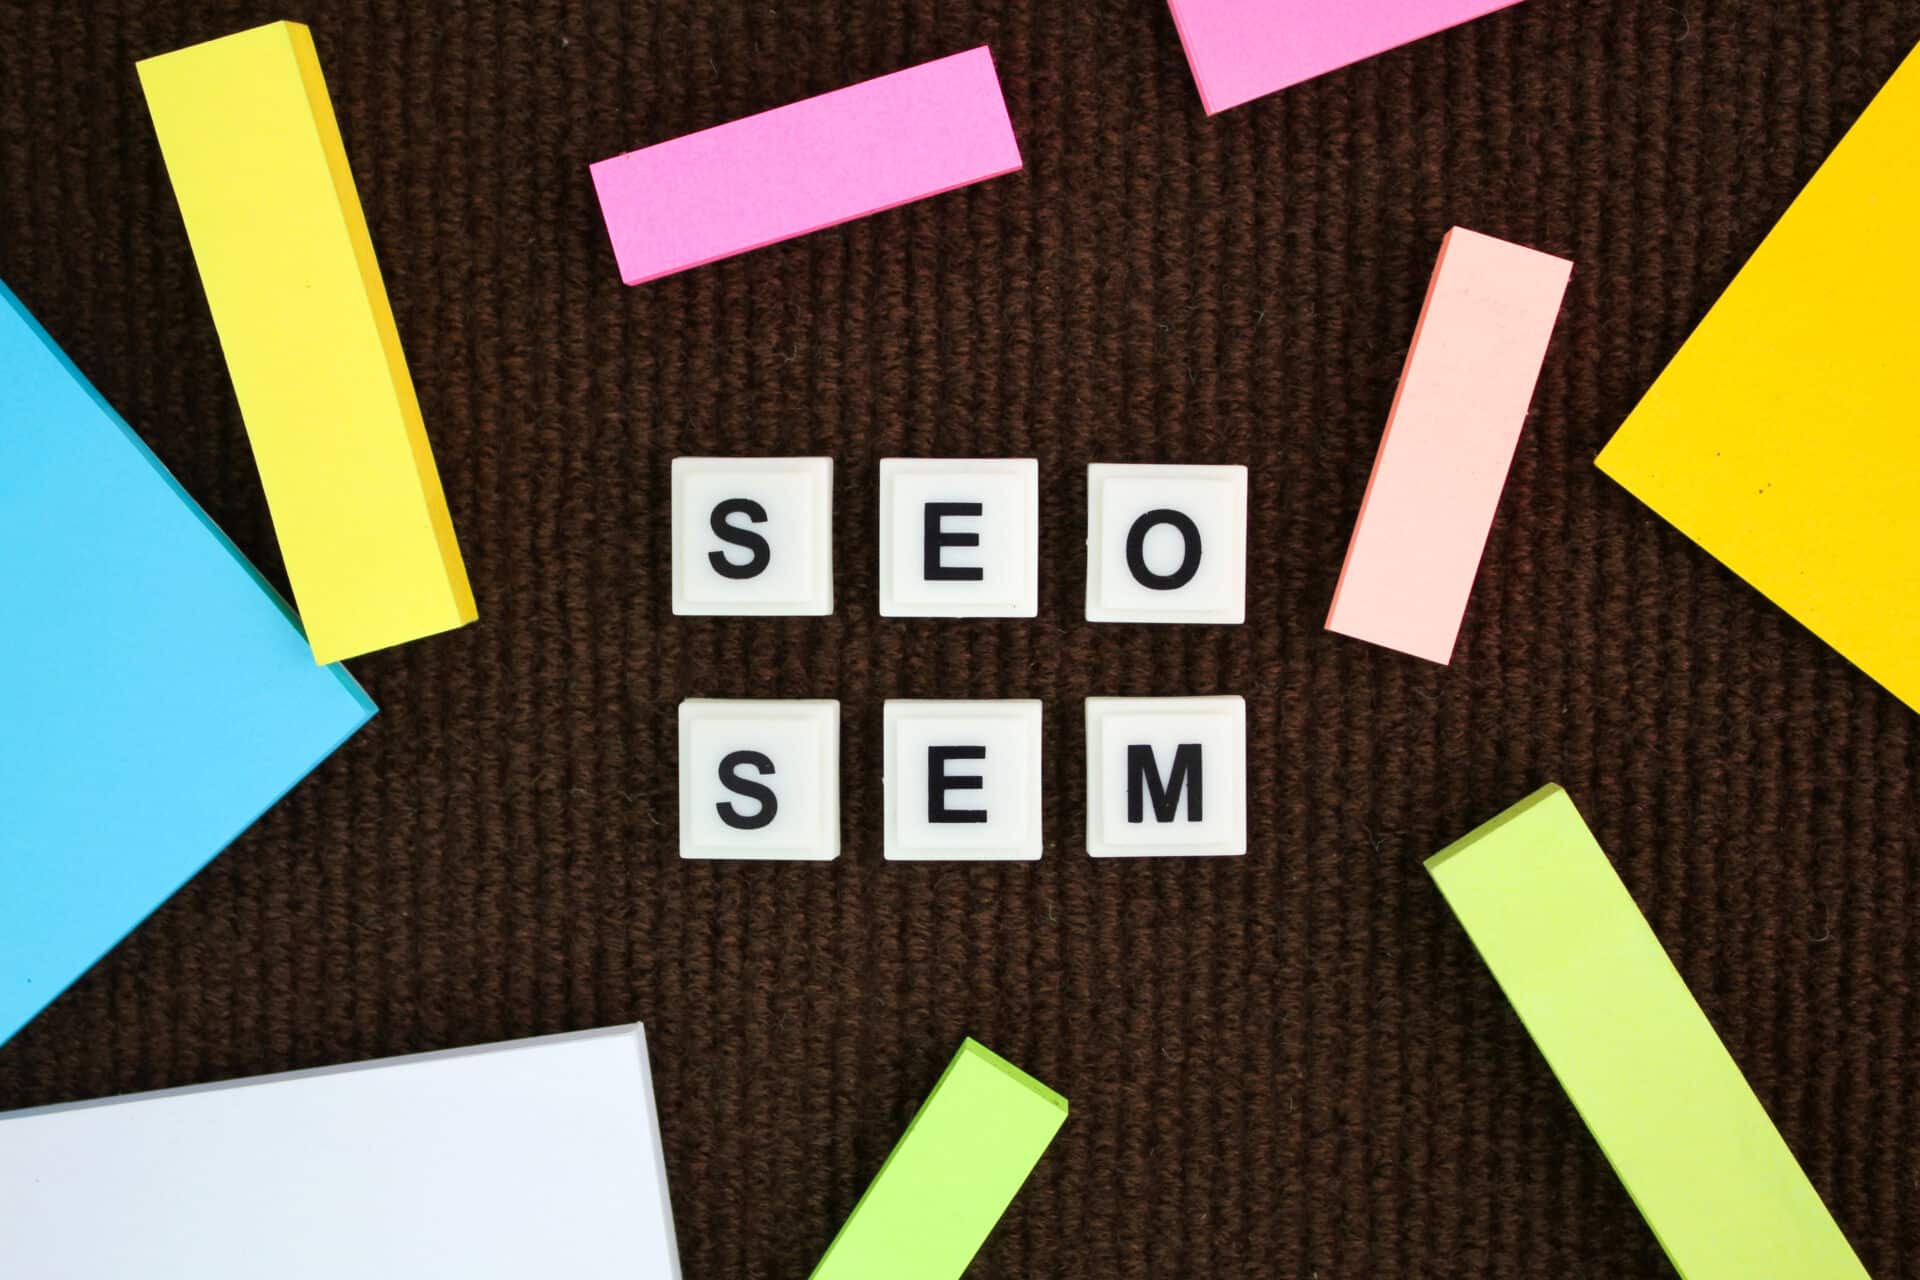 alphabet letters with seo semconcept search engine optimization search engine matketing SEO vs. SEM: ¿Cuál es la mejor estrategia para tu Startup?